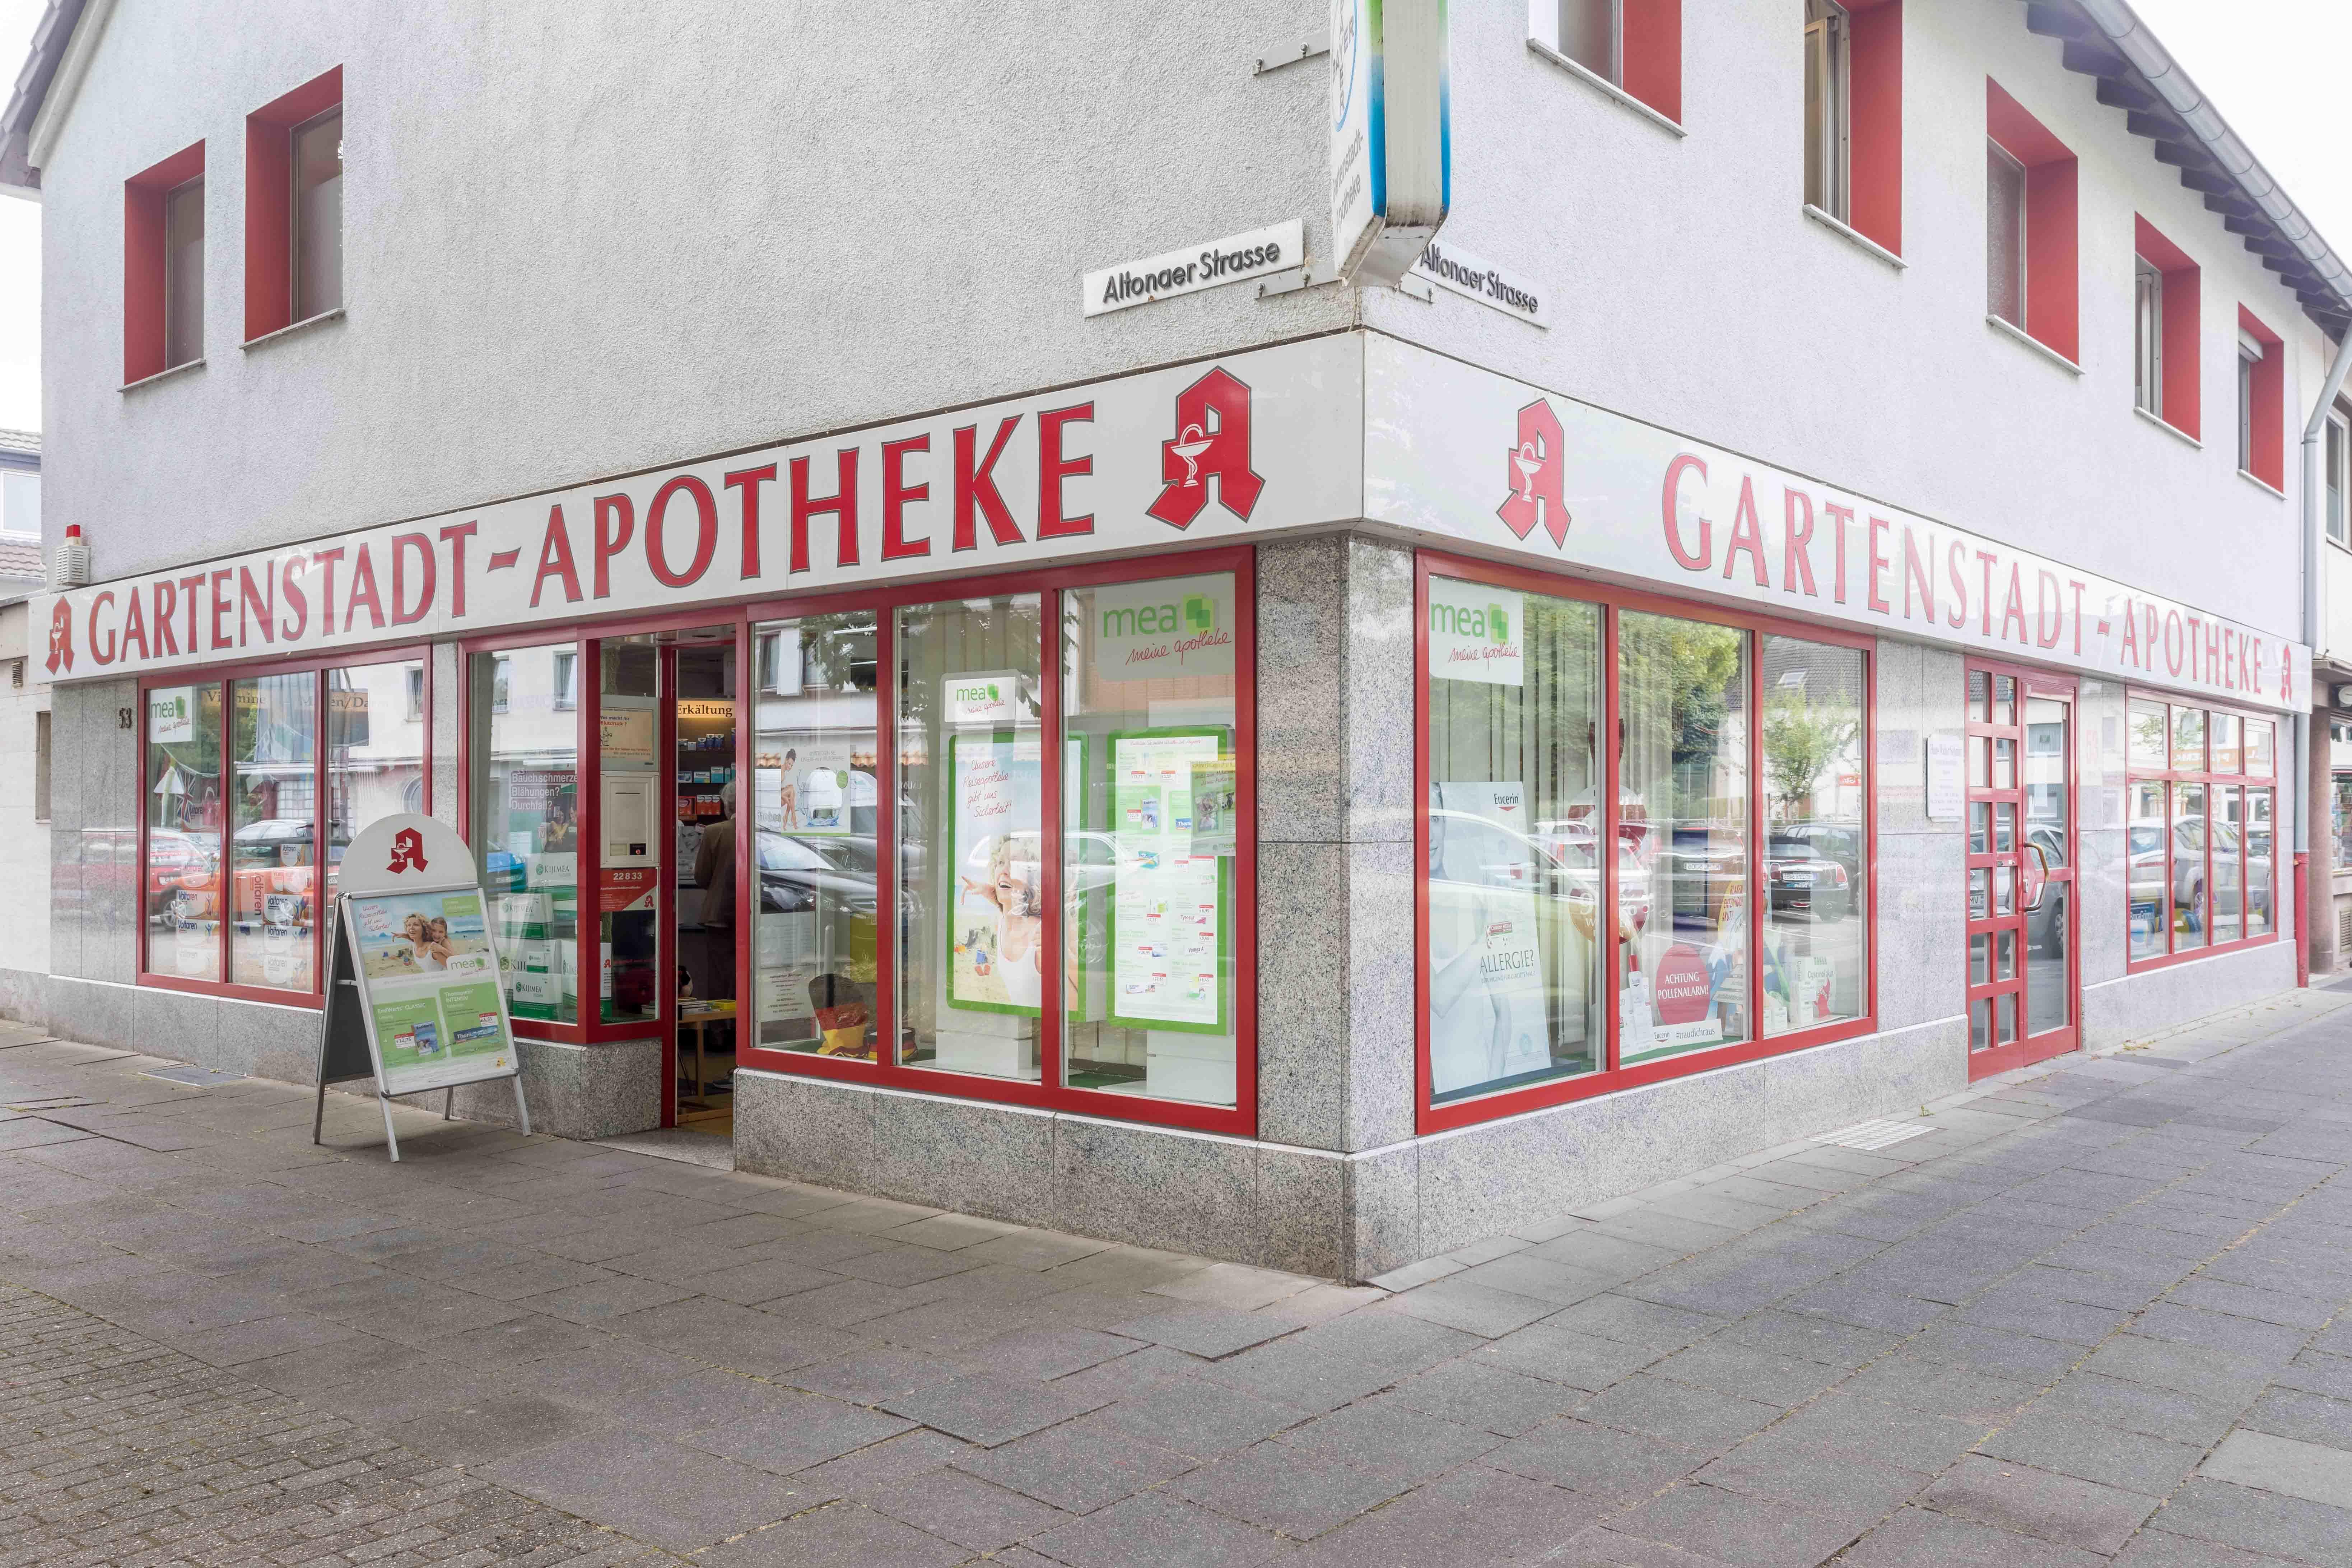 Gartenstadt-Apotheke | Köln, Altonaer Str. 53 in Köln